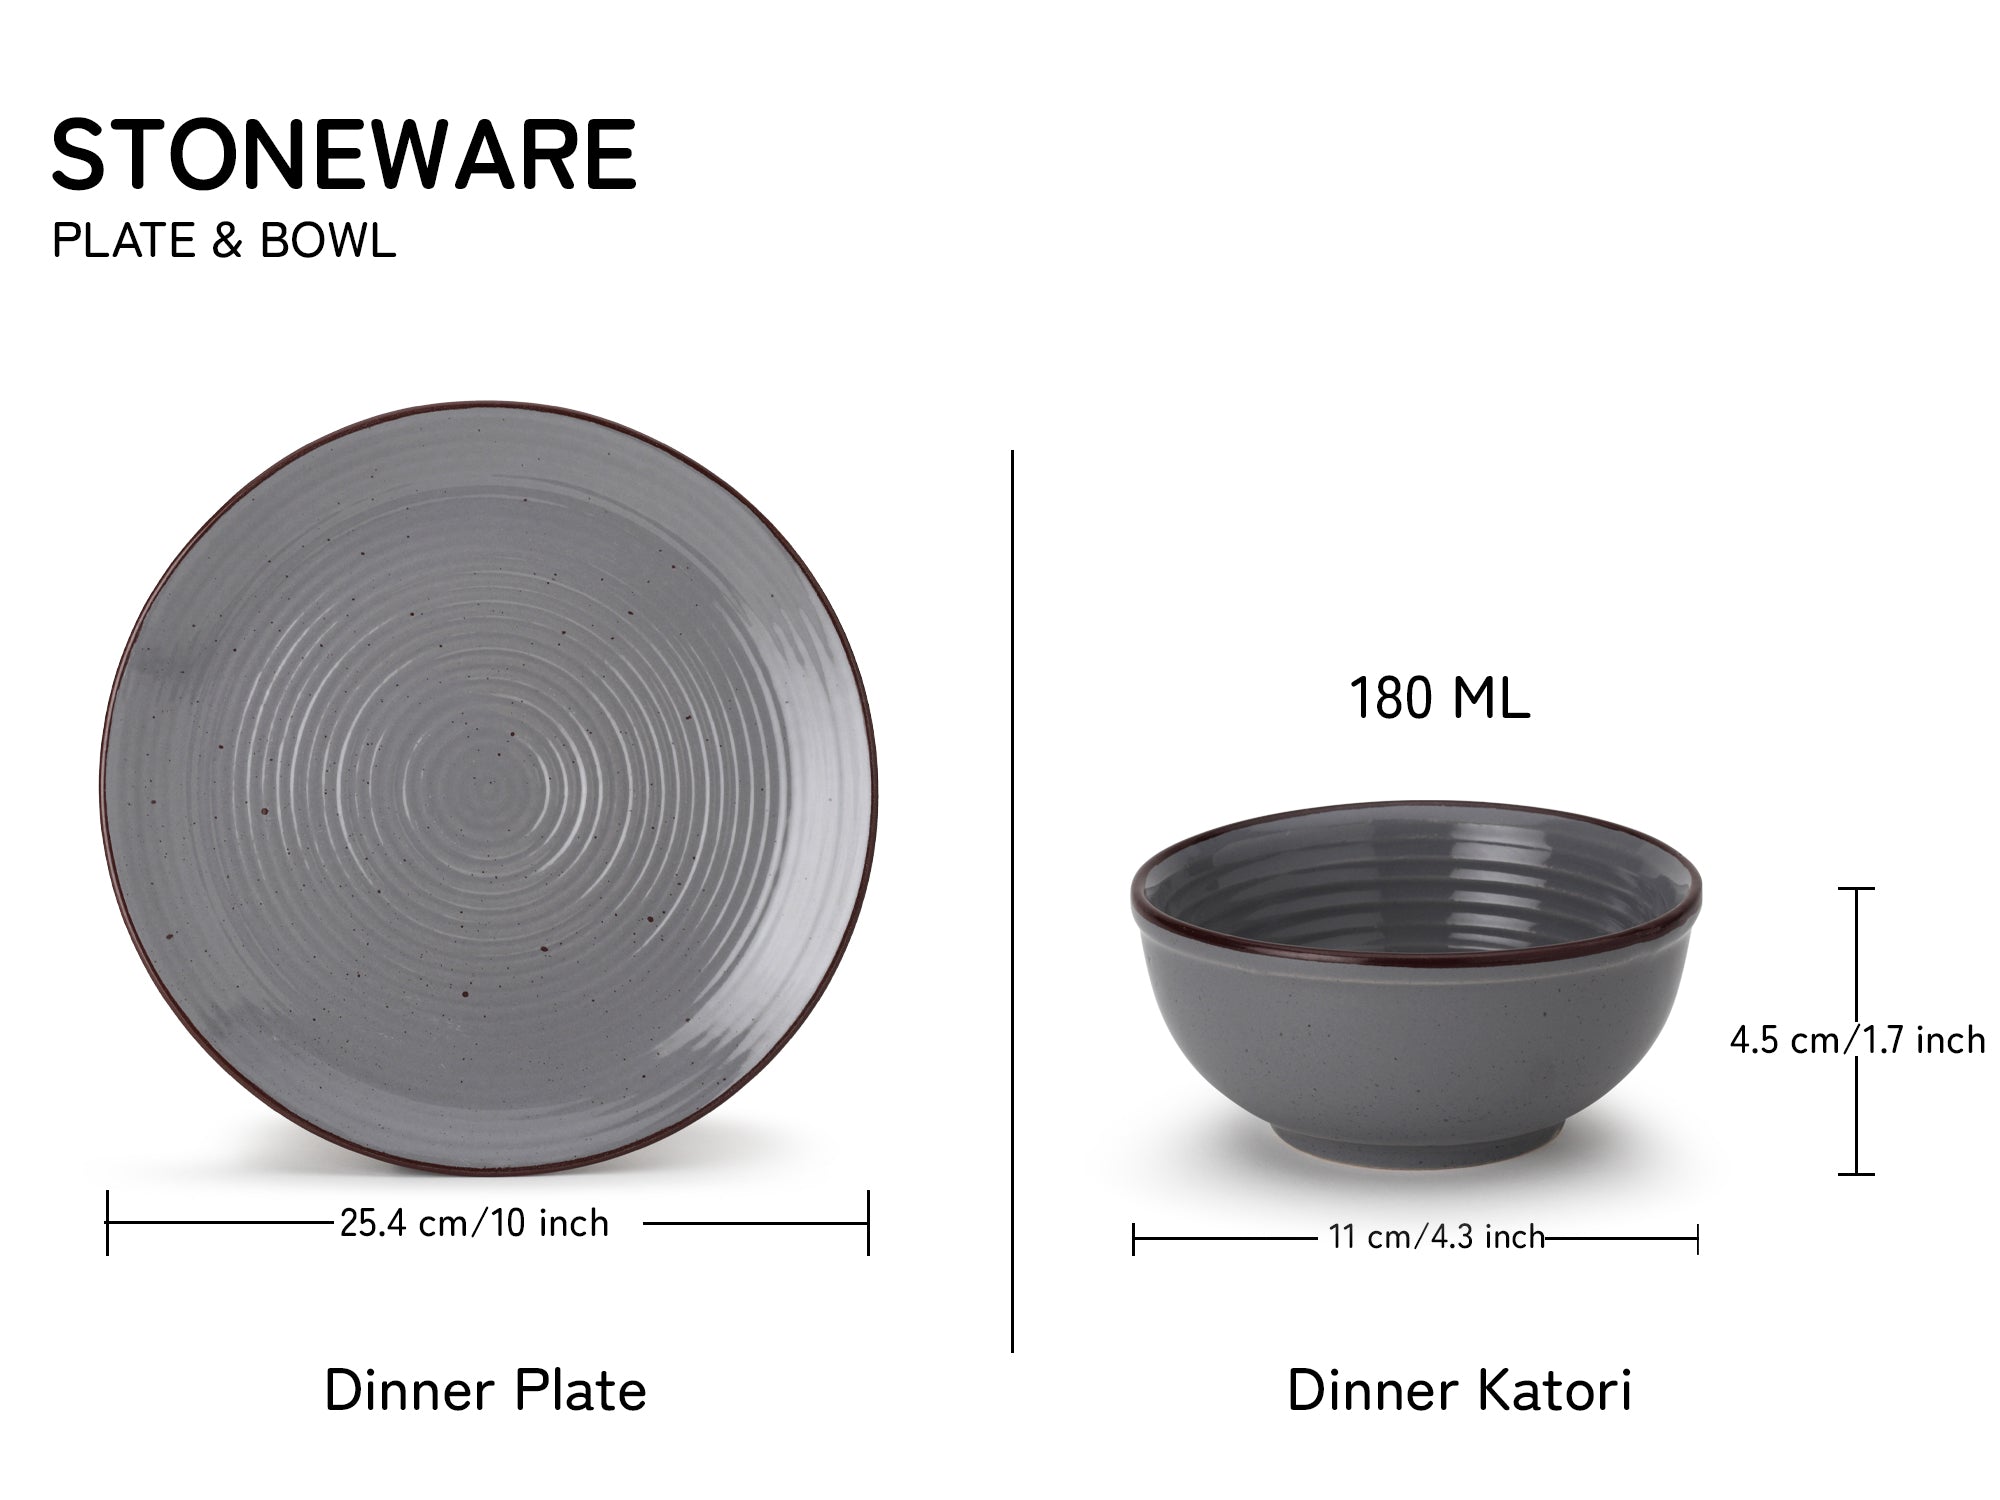 Graphite NoirDining Ensemble - 4 Dinner Plates & 4 Bowls/Katoris